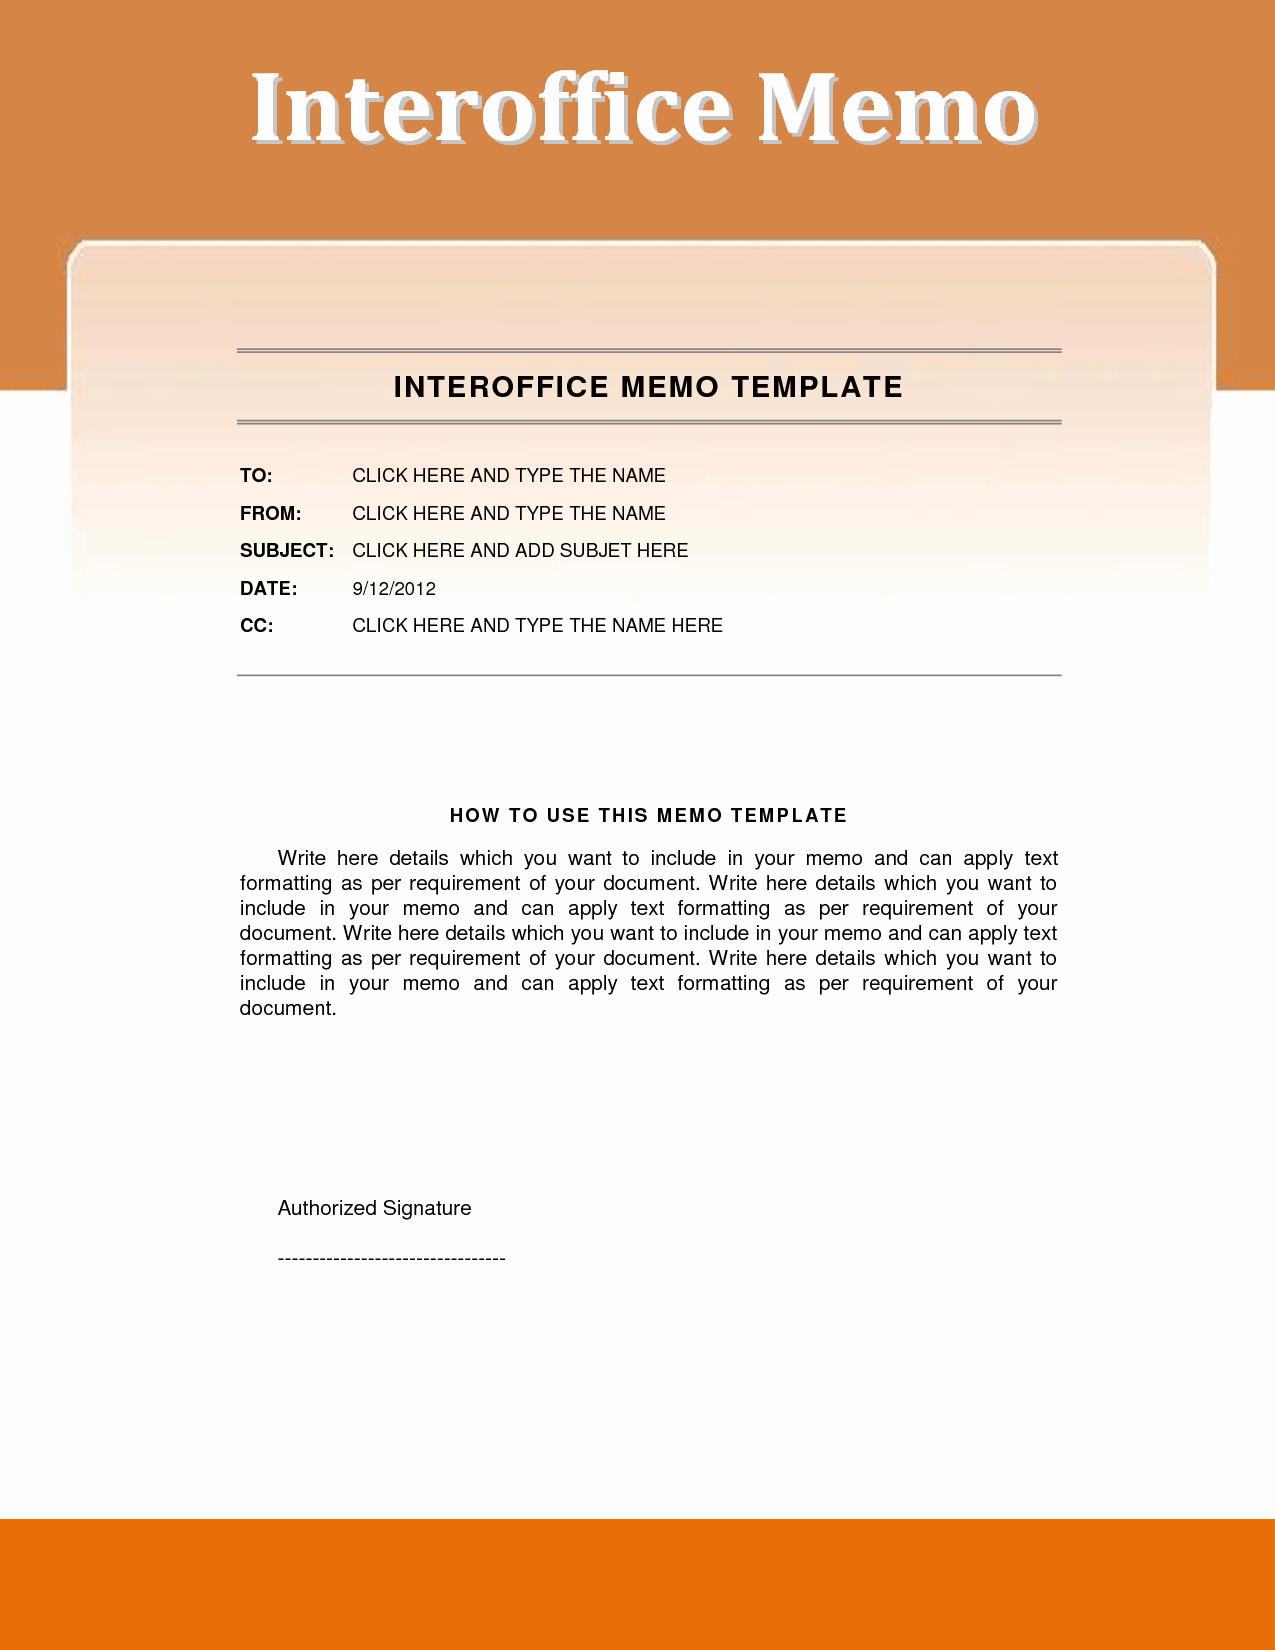 Microsoft Word Memo Template Inspirational Microsoft Fice Interoffice Memorandum Template Free